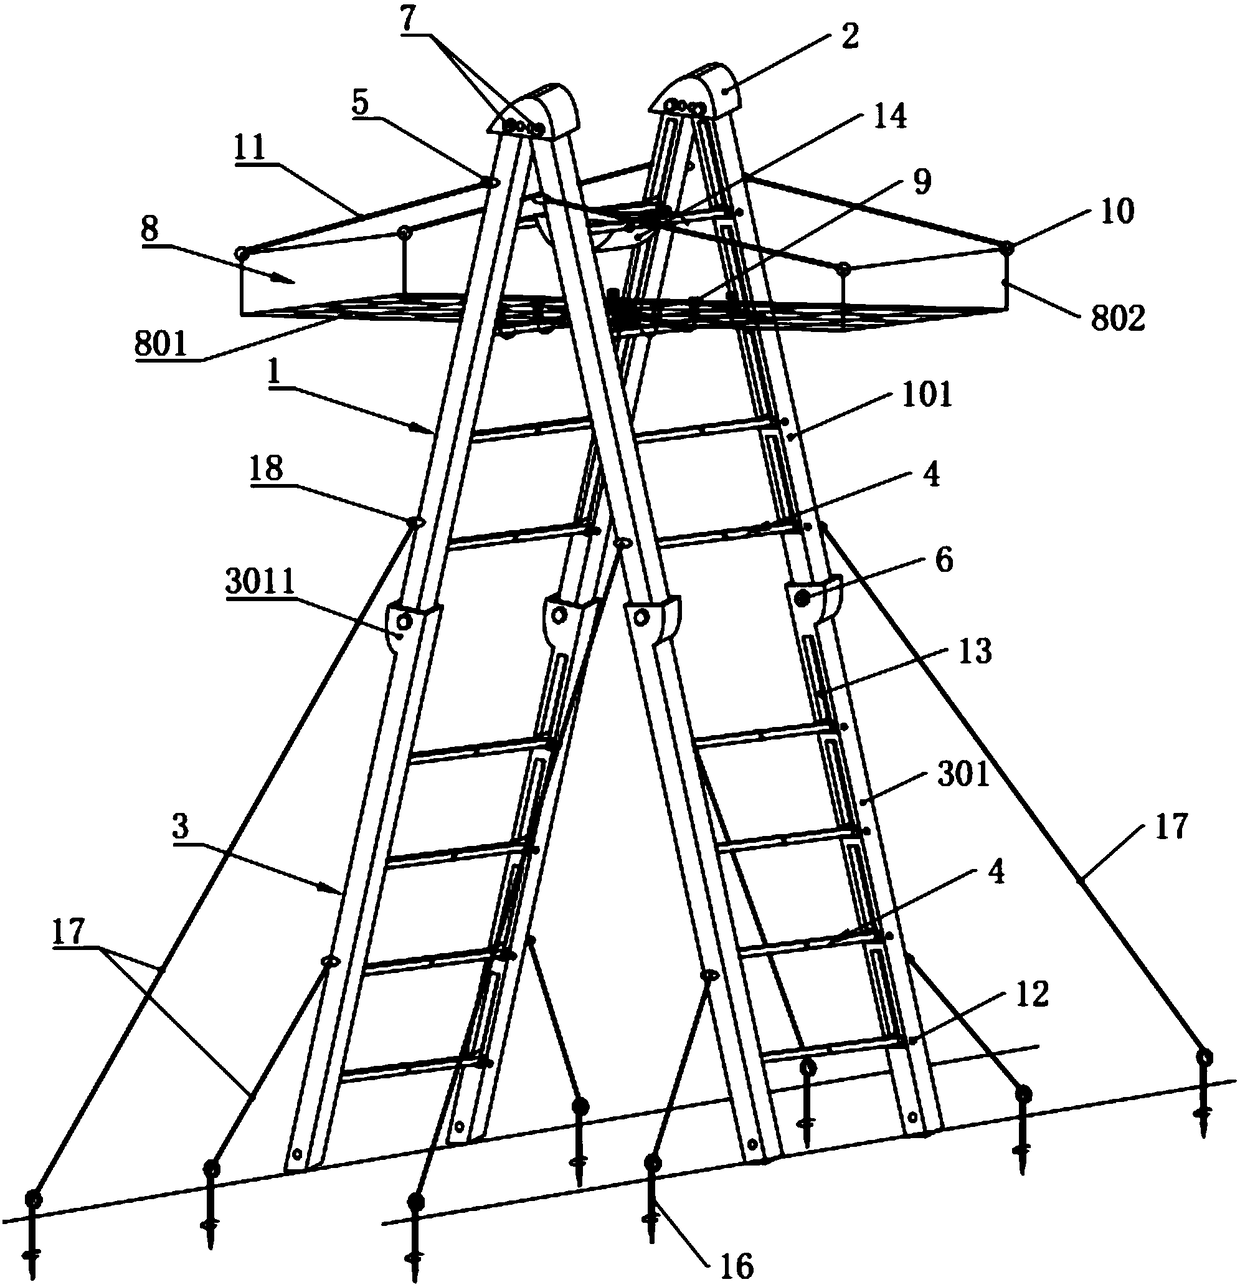 Portable insulation herringbone ladder platform capable of being assembled